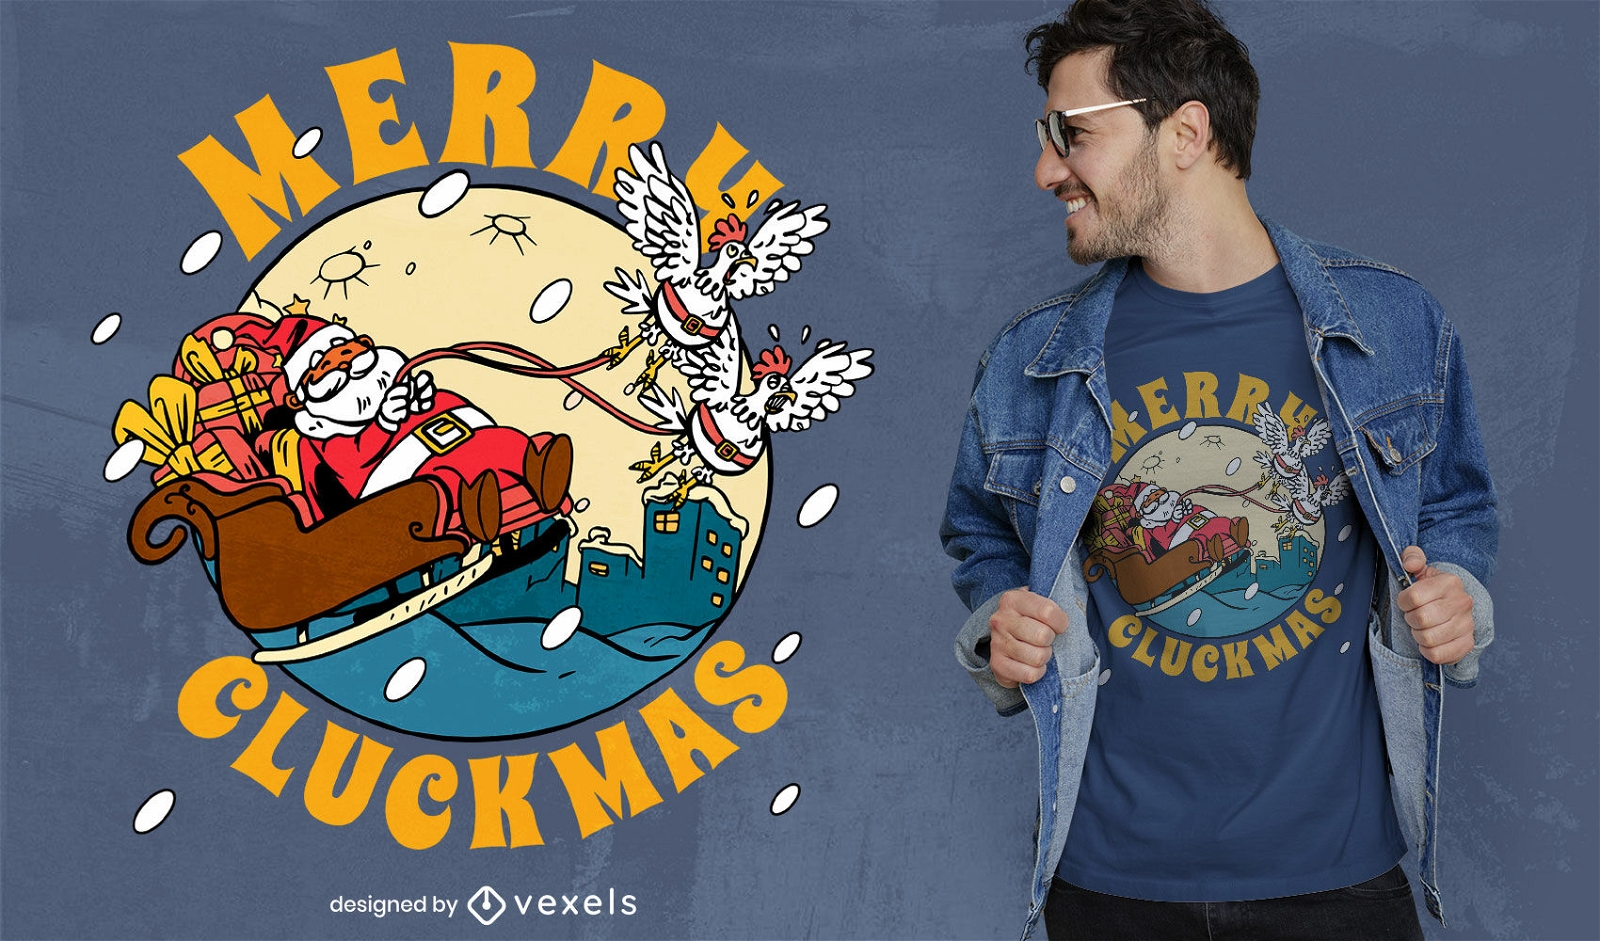 Frohe cluckmas-Weihnachts-T-Shirt-Design